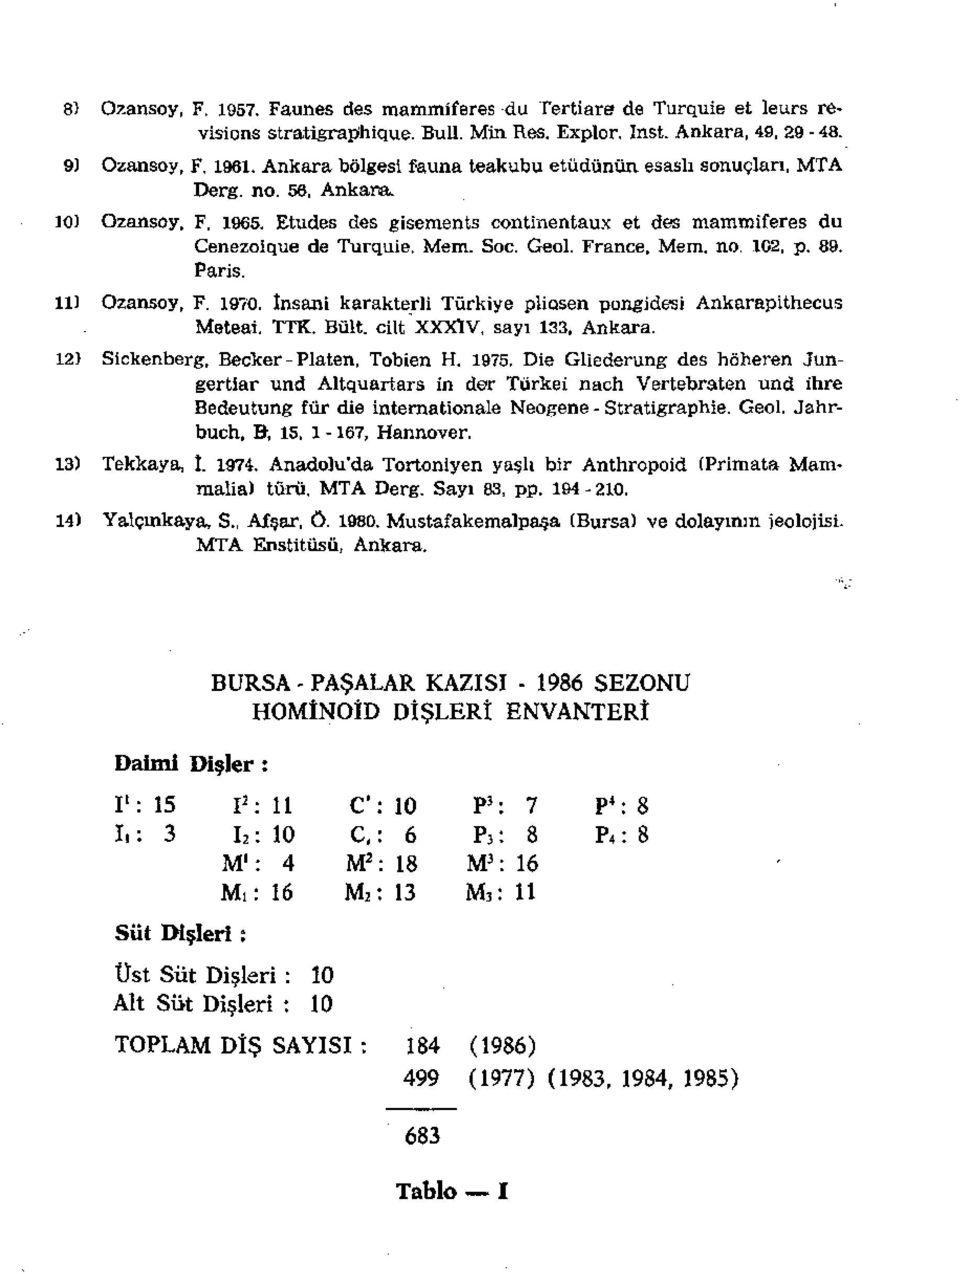 France, Merrı. no. 102, p. 89. Paris. 11) Ozansoy, F. 1970. İnsanı karakterli Türkiye pliasen pongldesi Ankarapithecus Meteai. TTK. Bült, cilt XXX1V, sayı 133, Ankara.